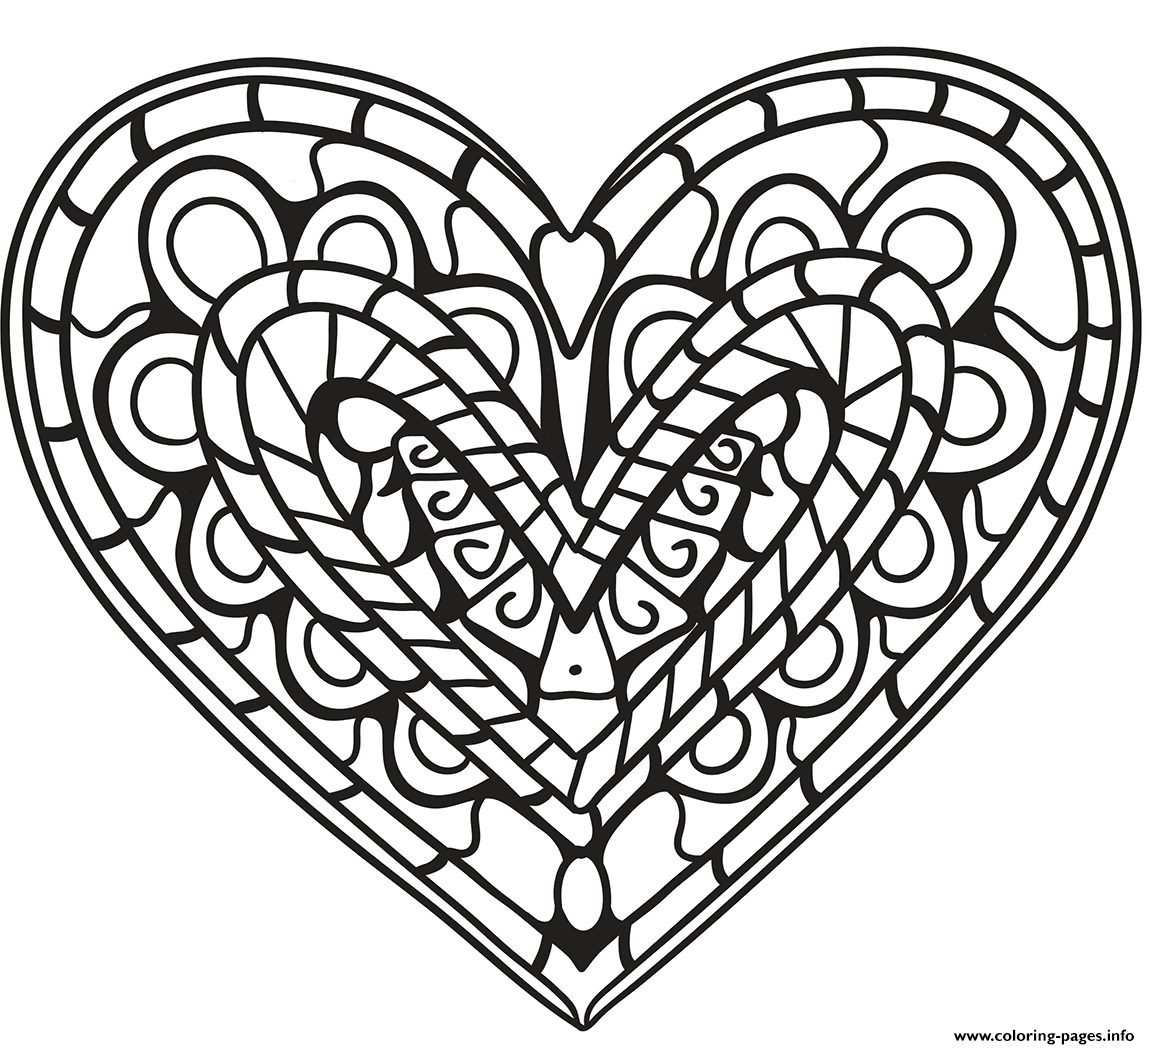 Heart Zentangle coloring